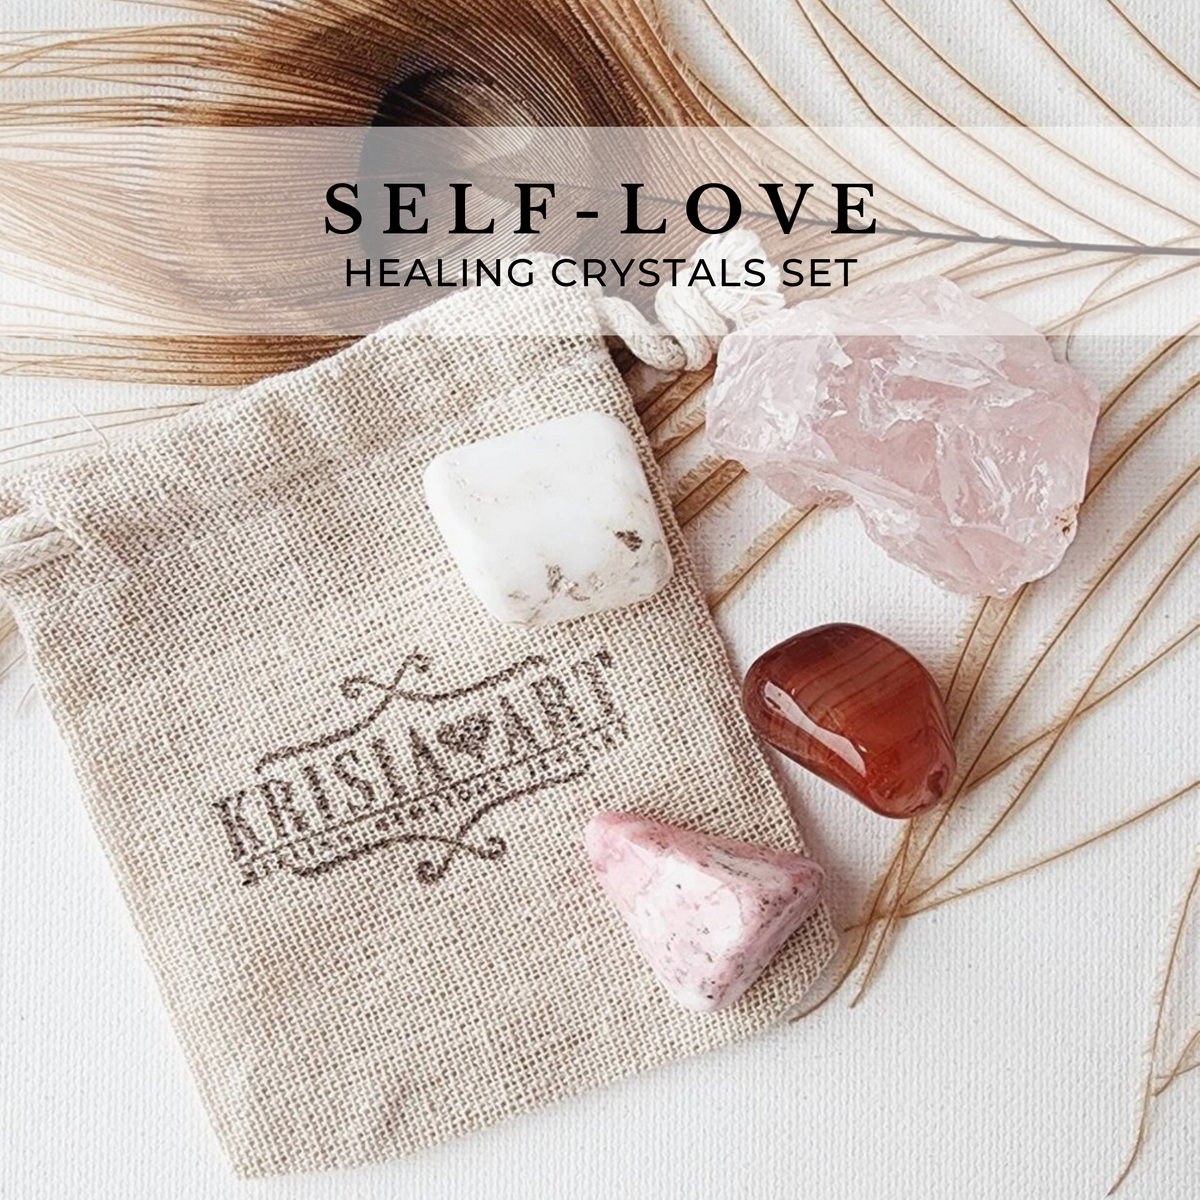 SELF-LOVE crystal set for self care, well being, positive energy, mental wellbeing, joy and manifestation. Rose quartz, Magnesite, Rhodonite, Carnelian